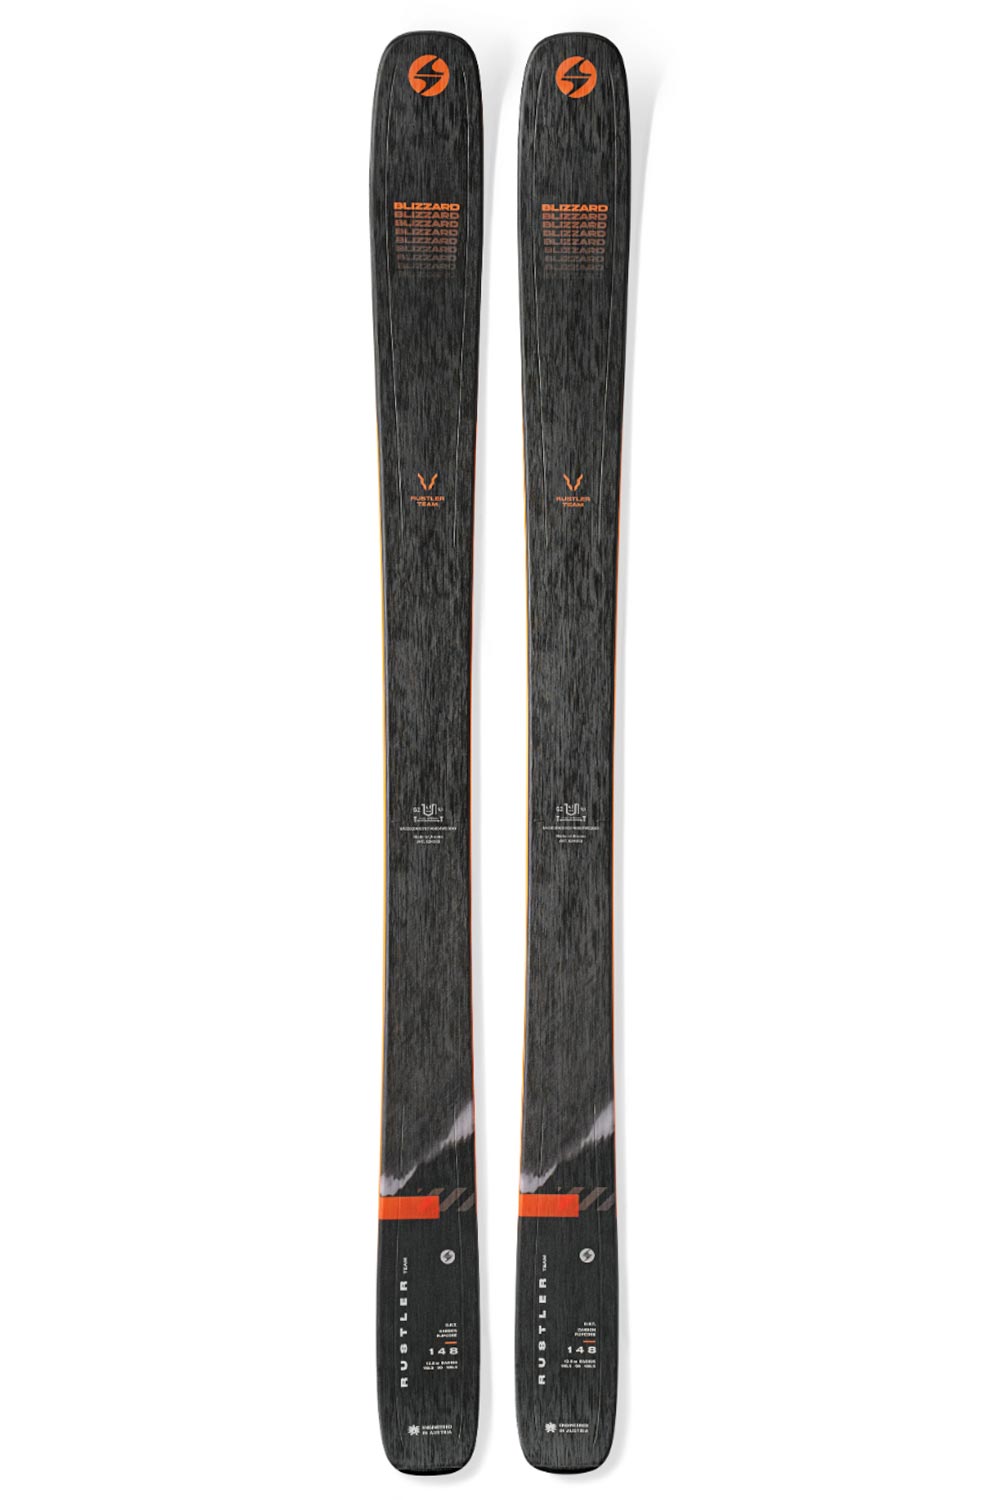 Blizzard Rustler Team downhill skis, black with orange accents